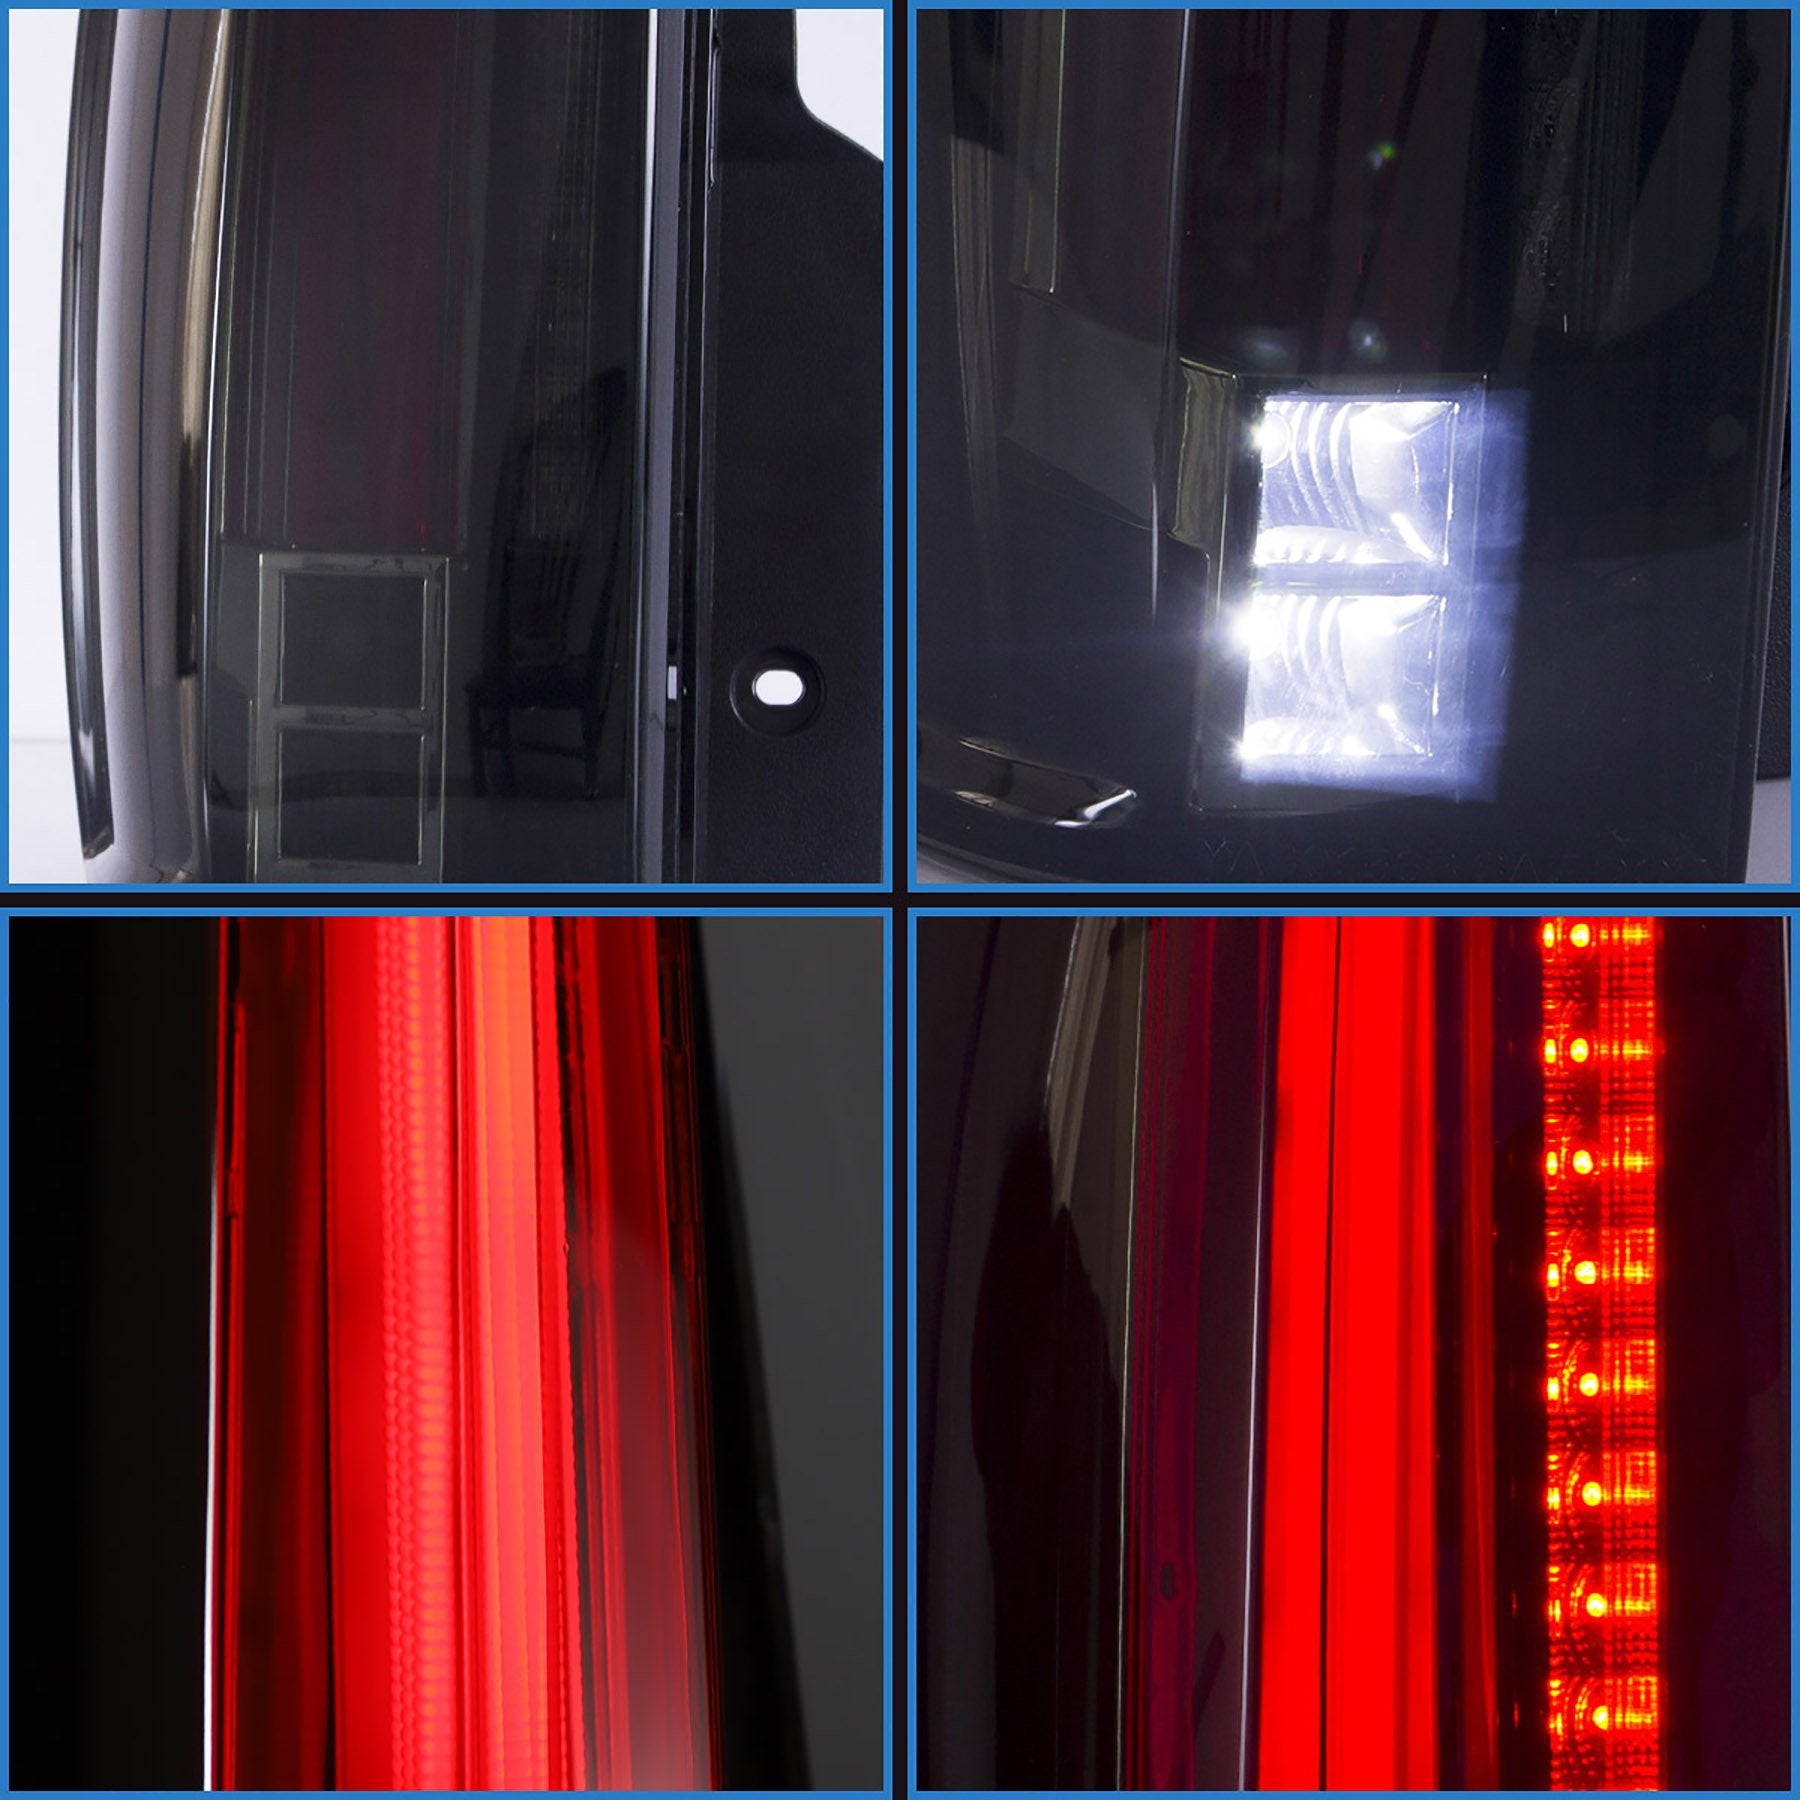 07-14 Cadillac Escalade 第 3 世代 (GMT900) Vland LED テールライト、シーケンシャル ウインカー付き